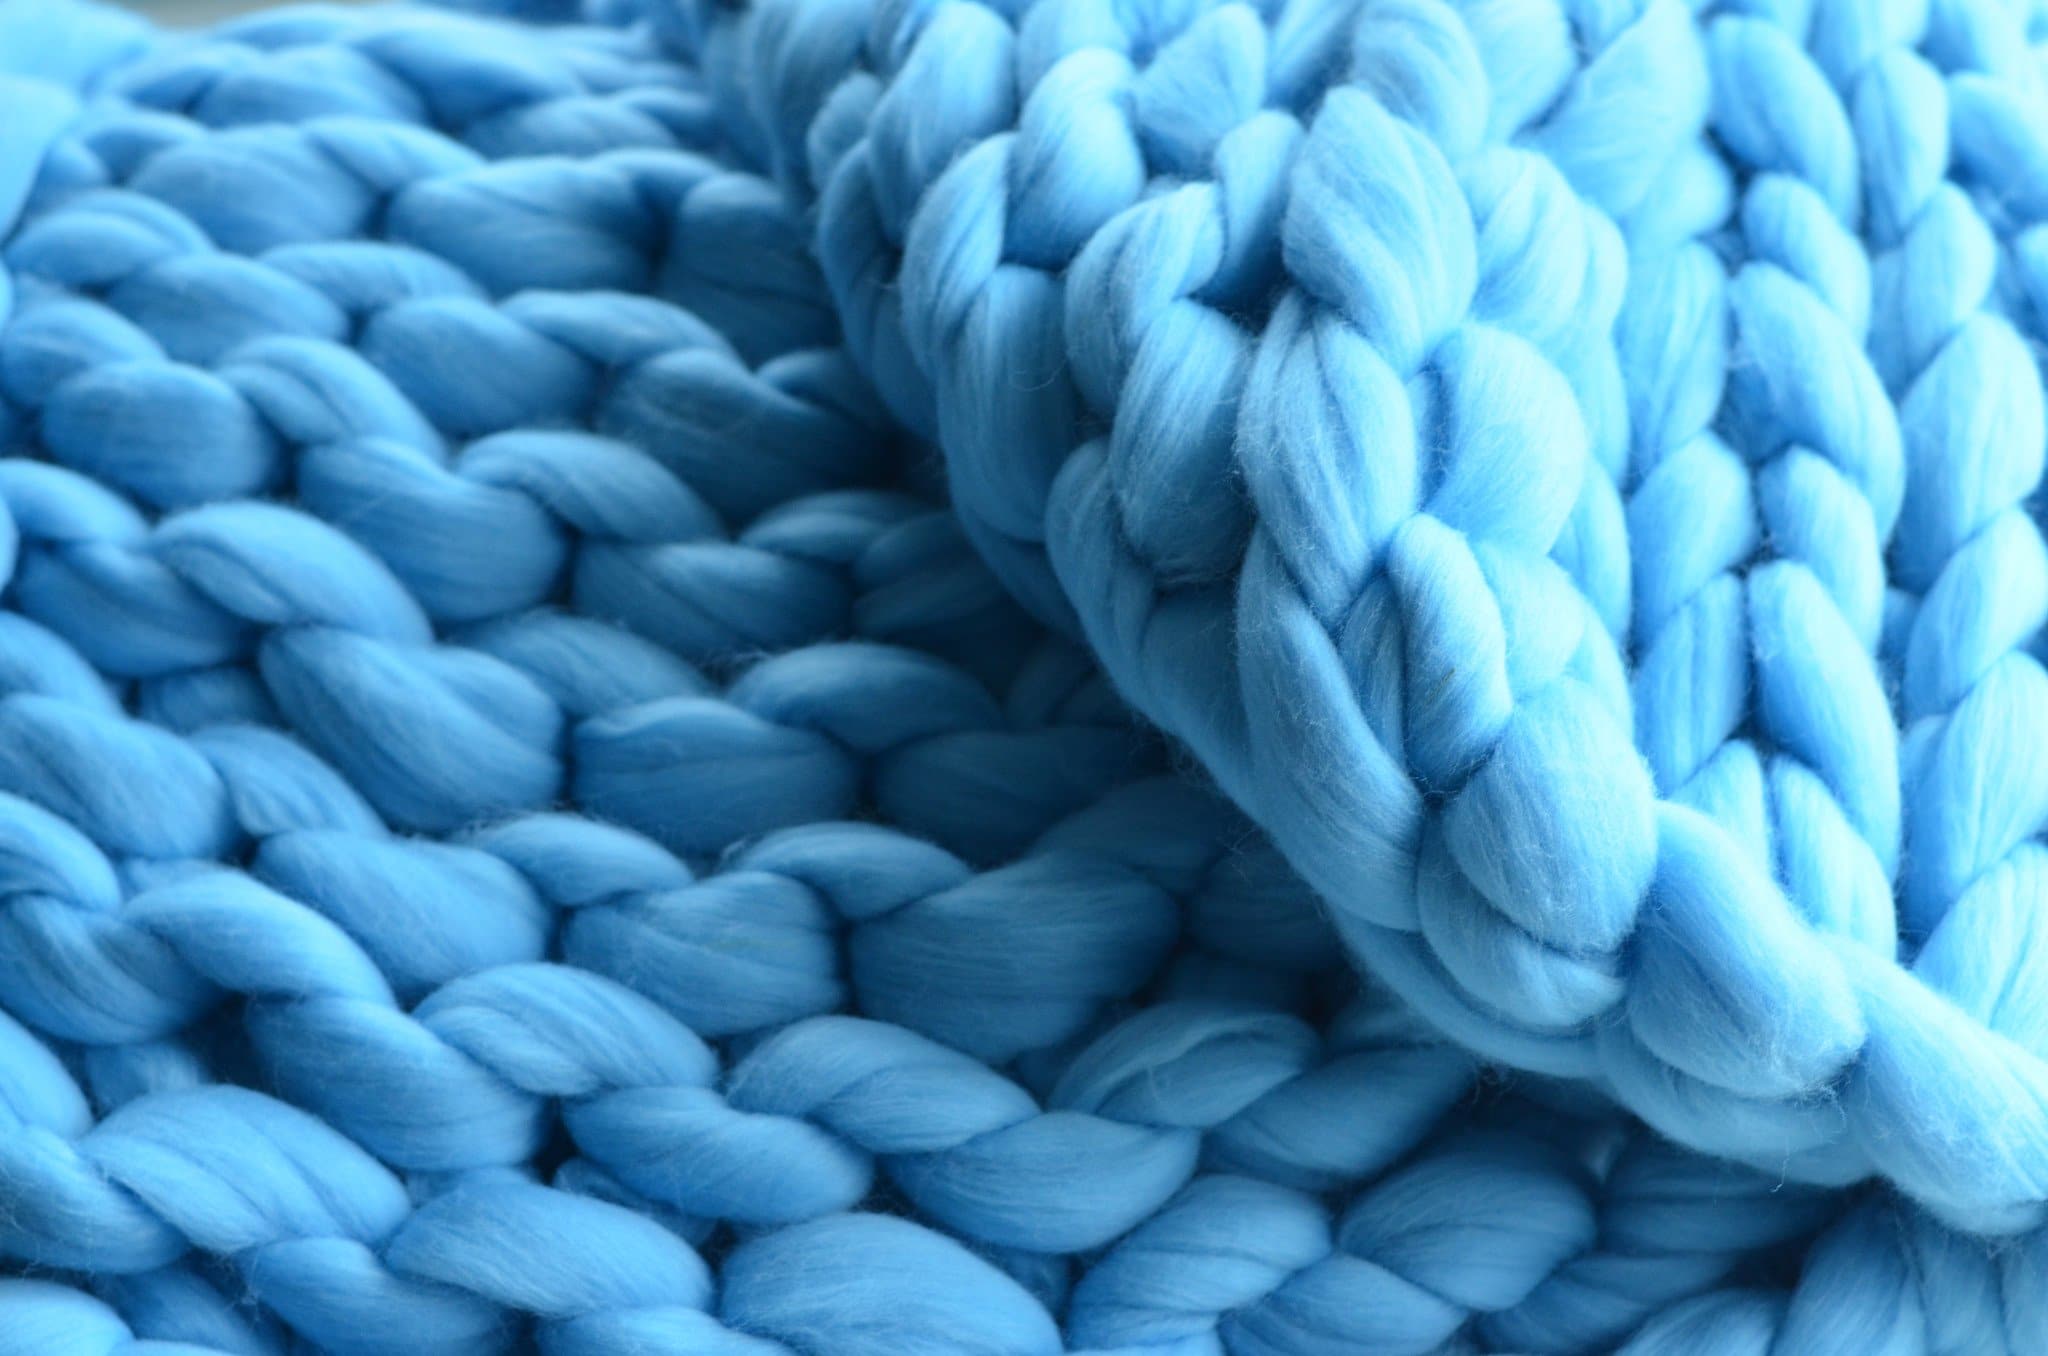 Hand Knit Chunky Blanket  Take and Make Kit – Studio 223 AZ